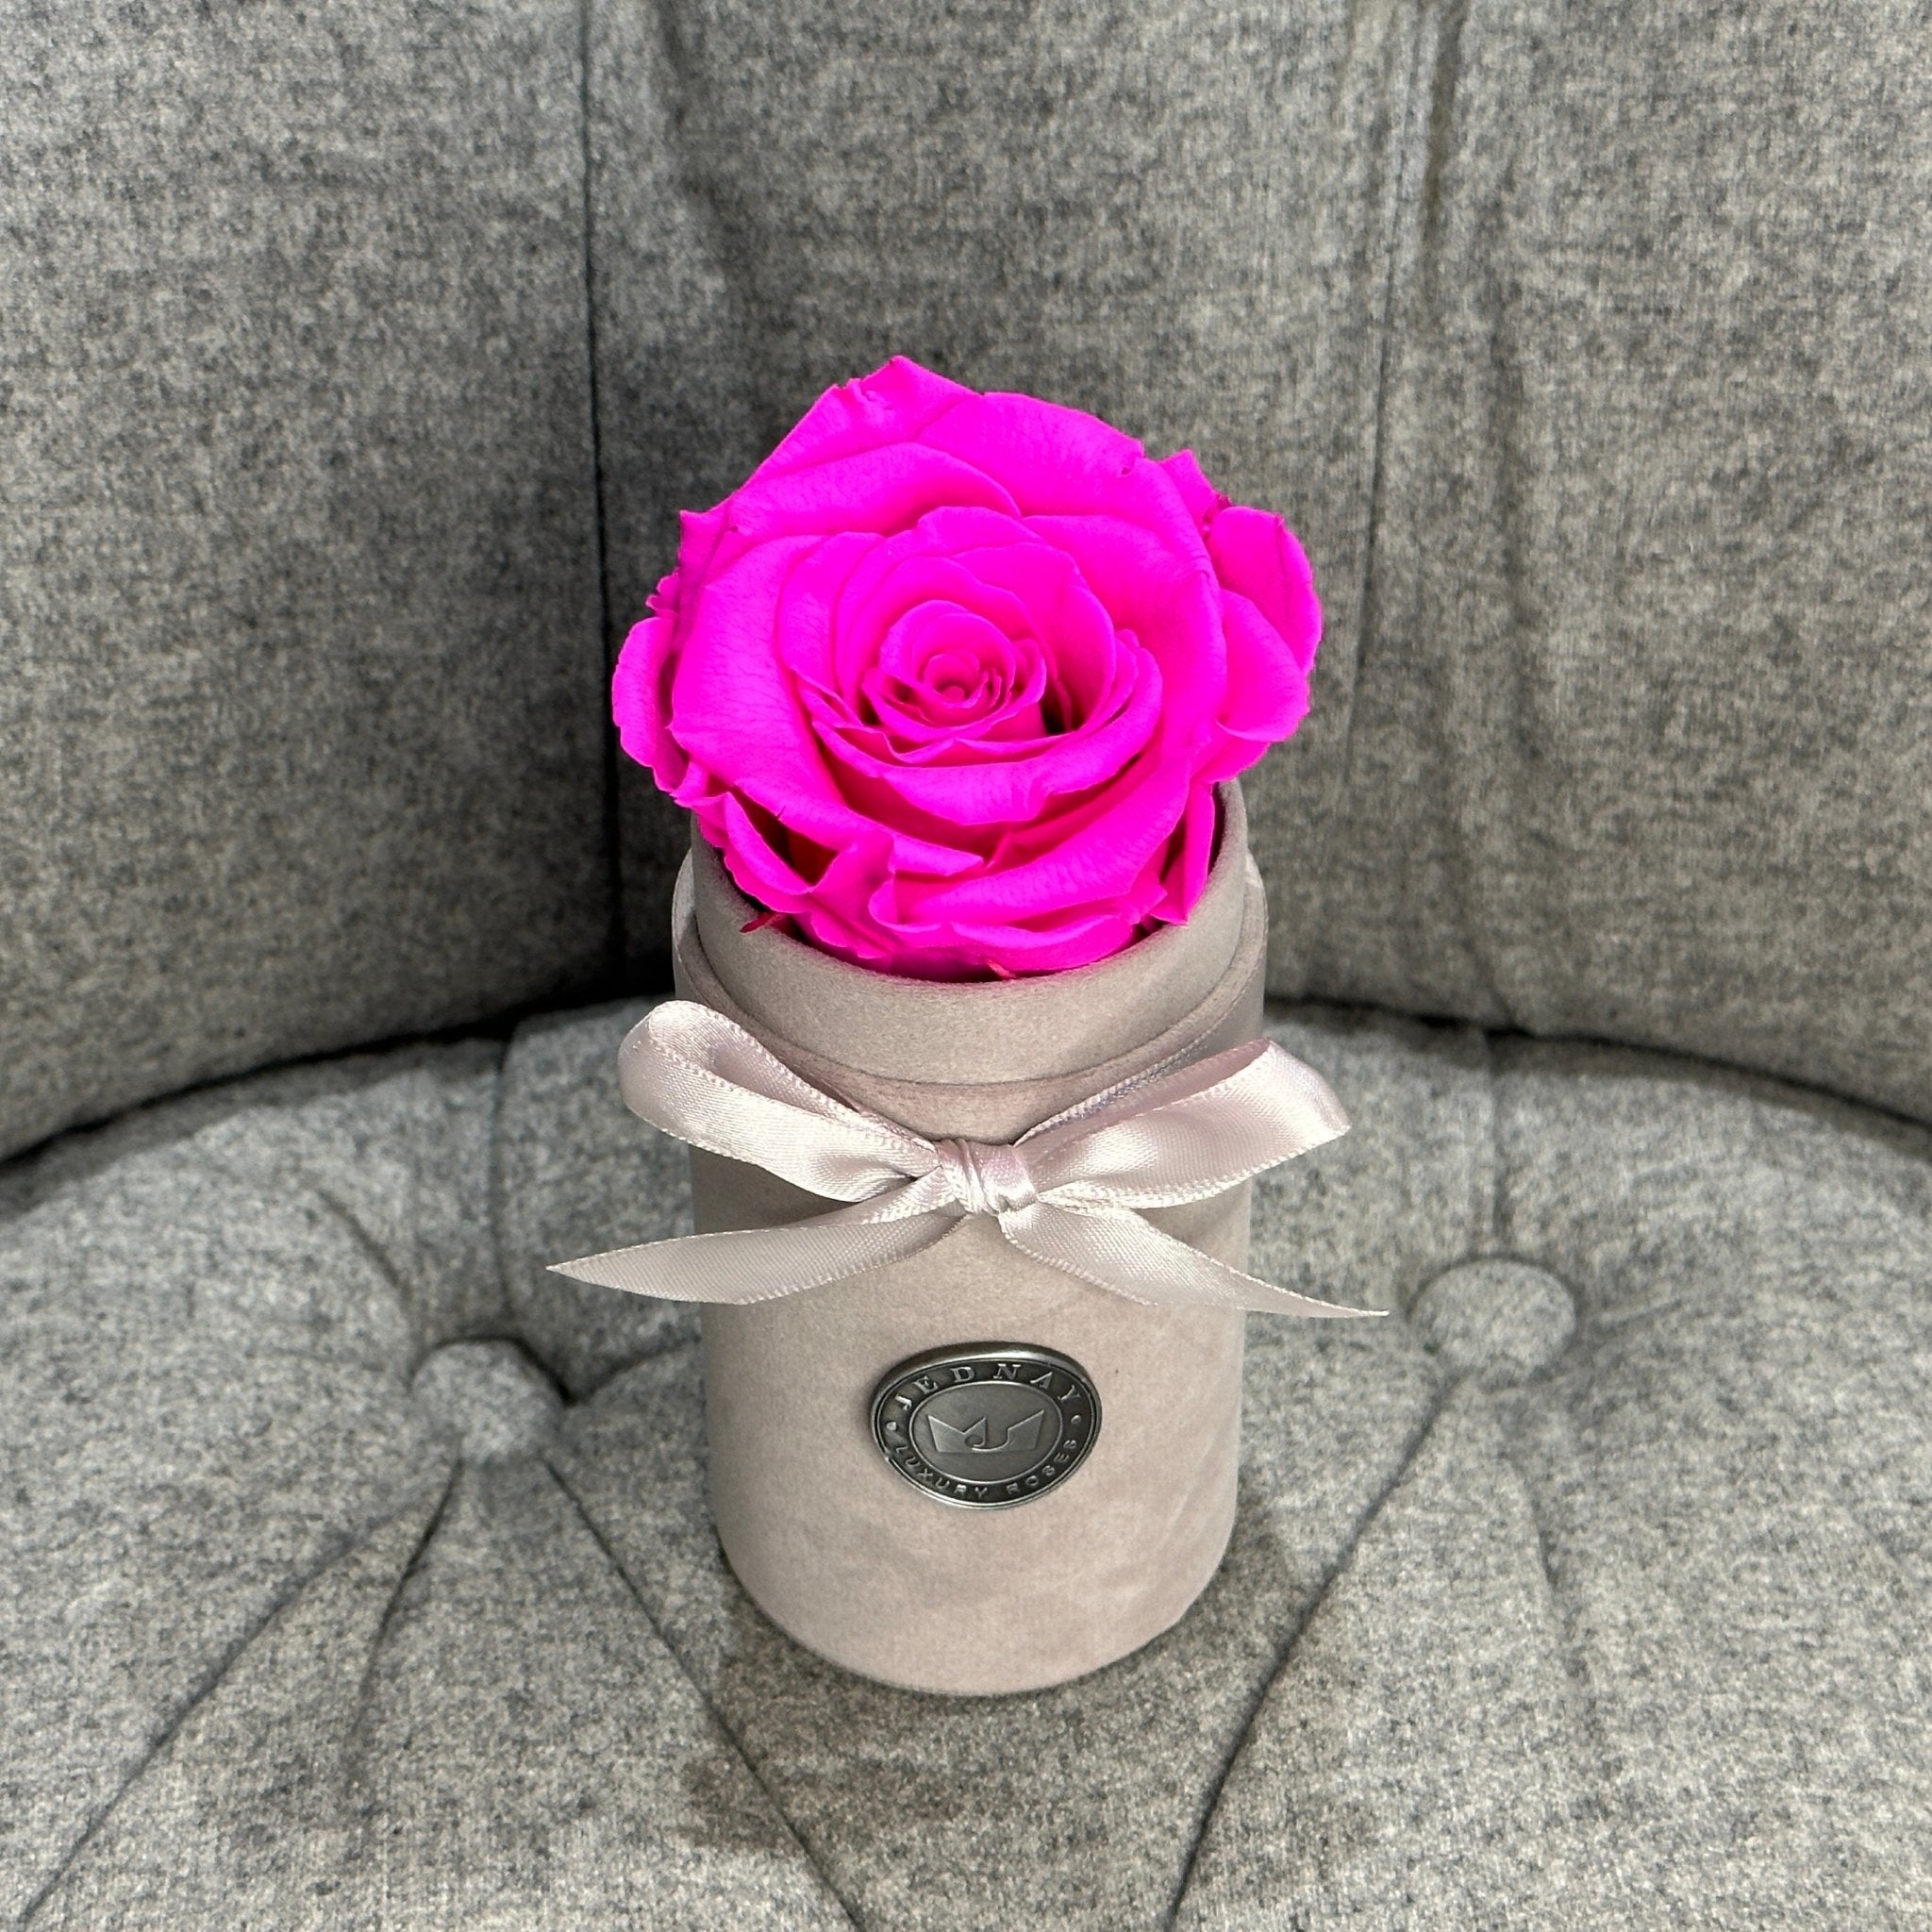 Single Grey Suede Forever Rose Box - Bubblegum Pink Eternal Rose - Jednay Roses